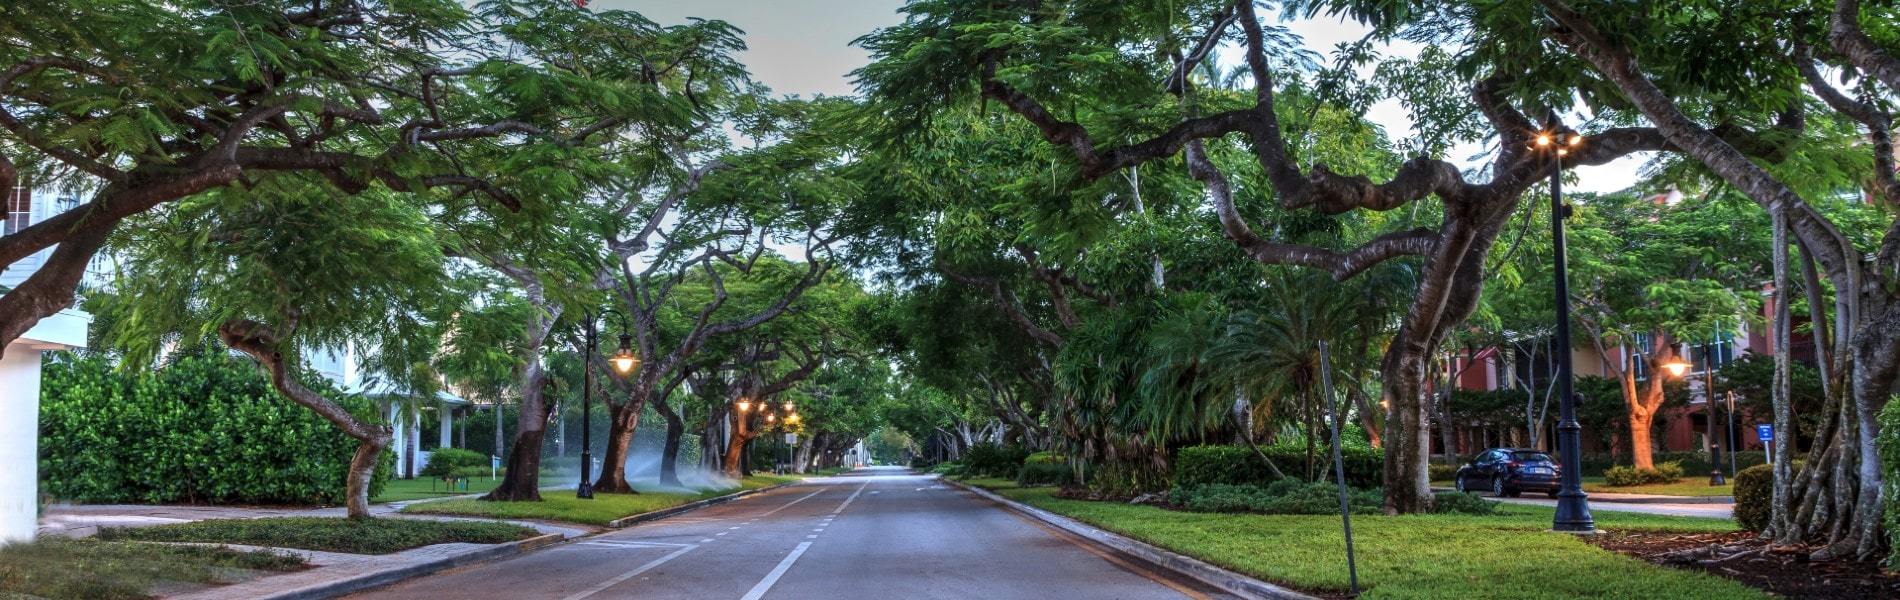 old naples florida street - overhanging trees